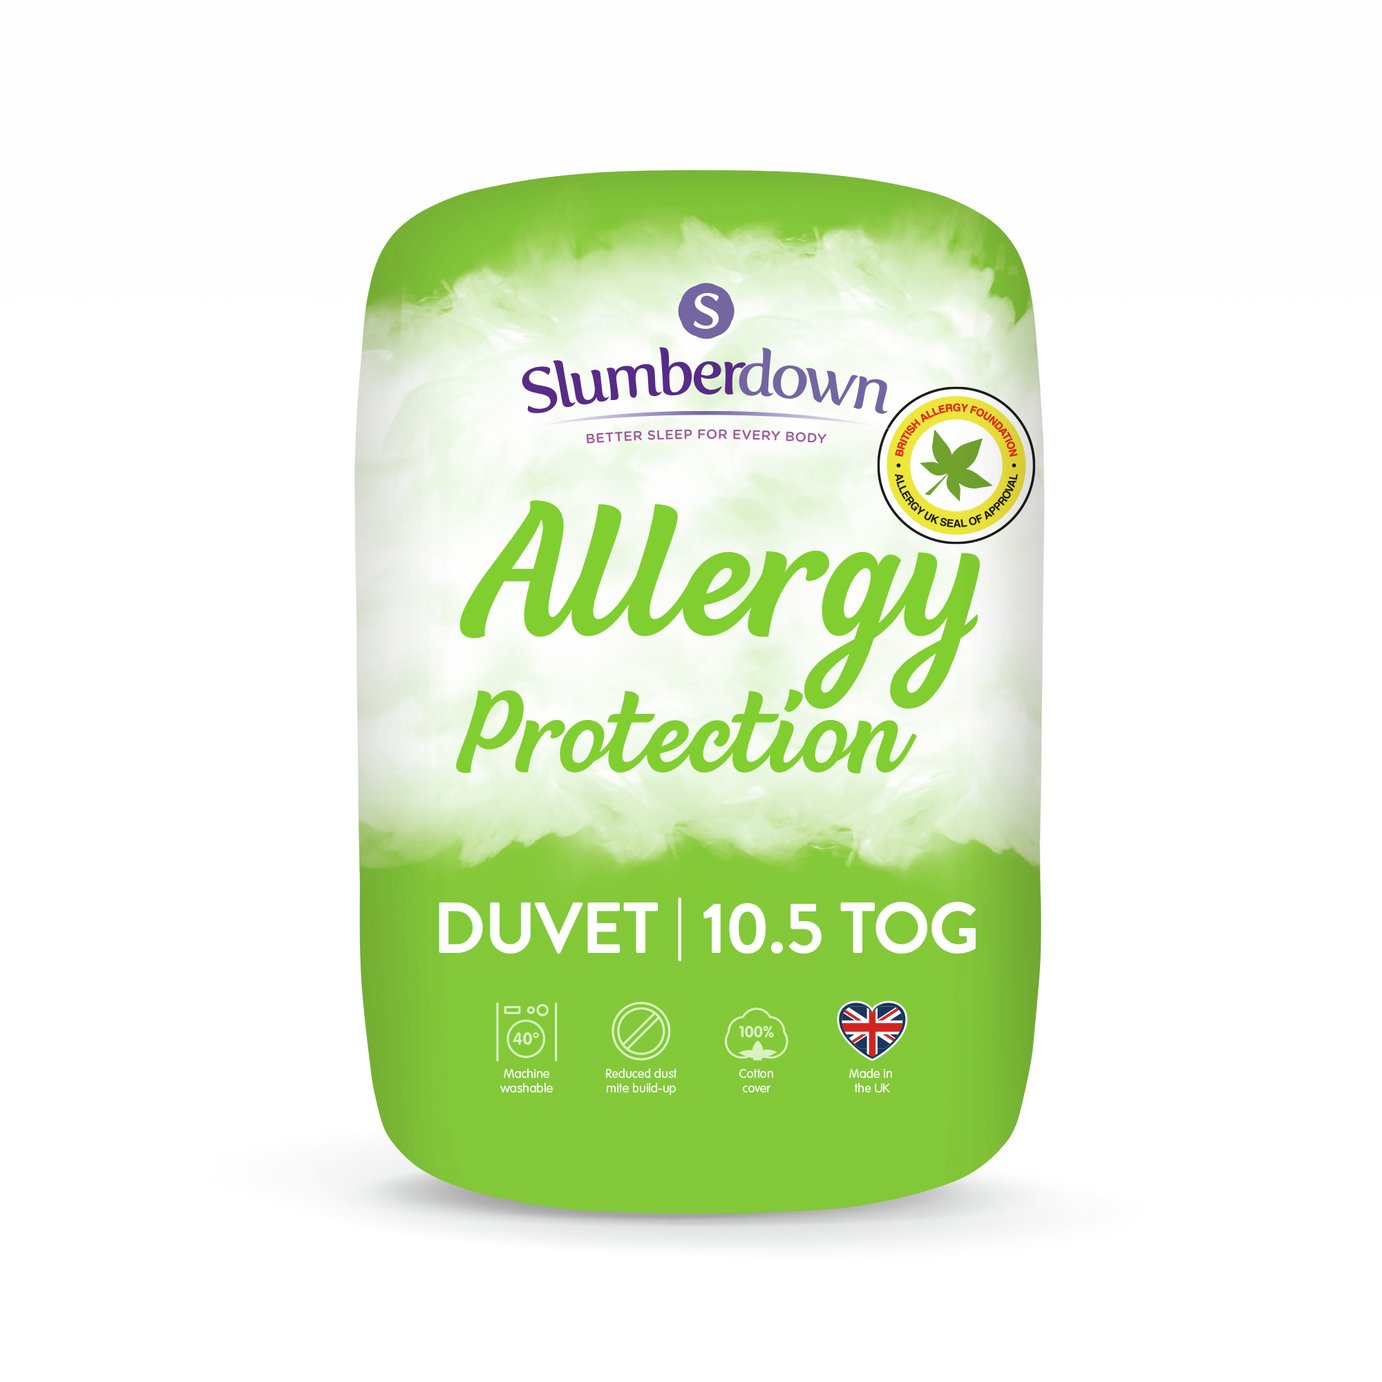 argos anti allergy duvet